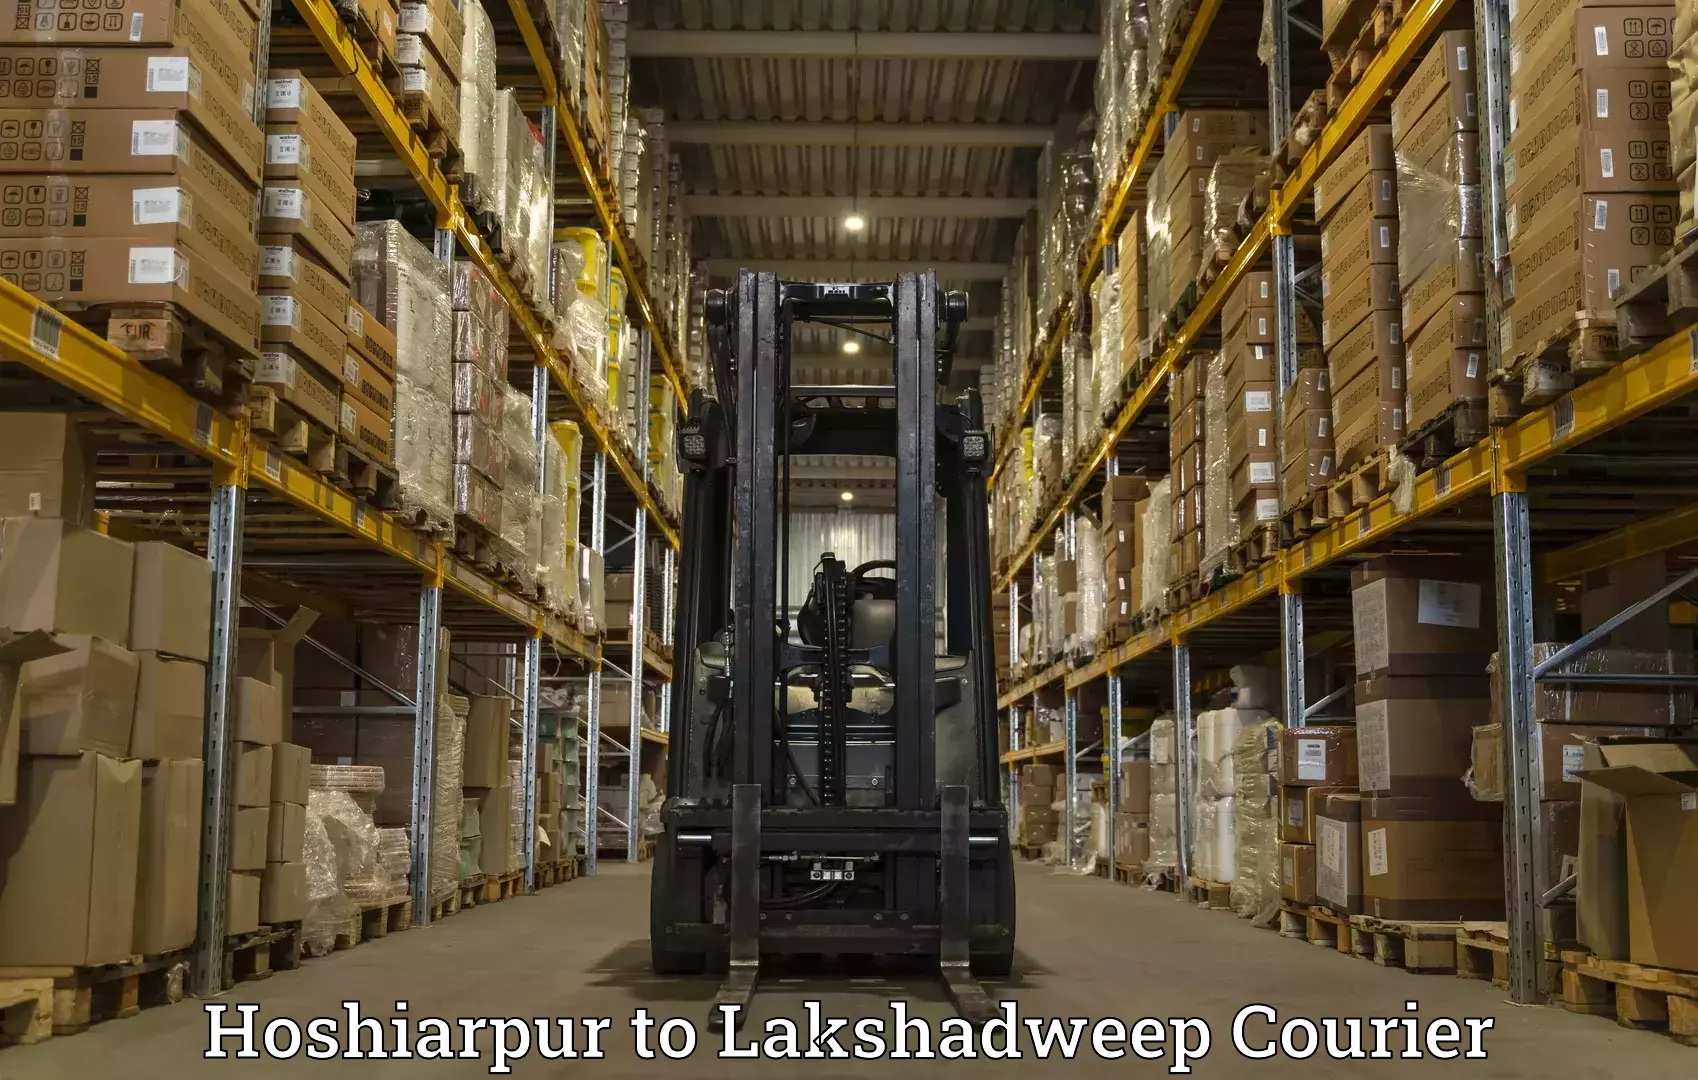 Global shipping networks Hoshiarpur to Lakshadweep